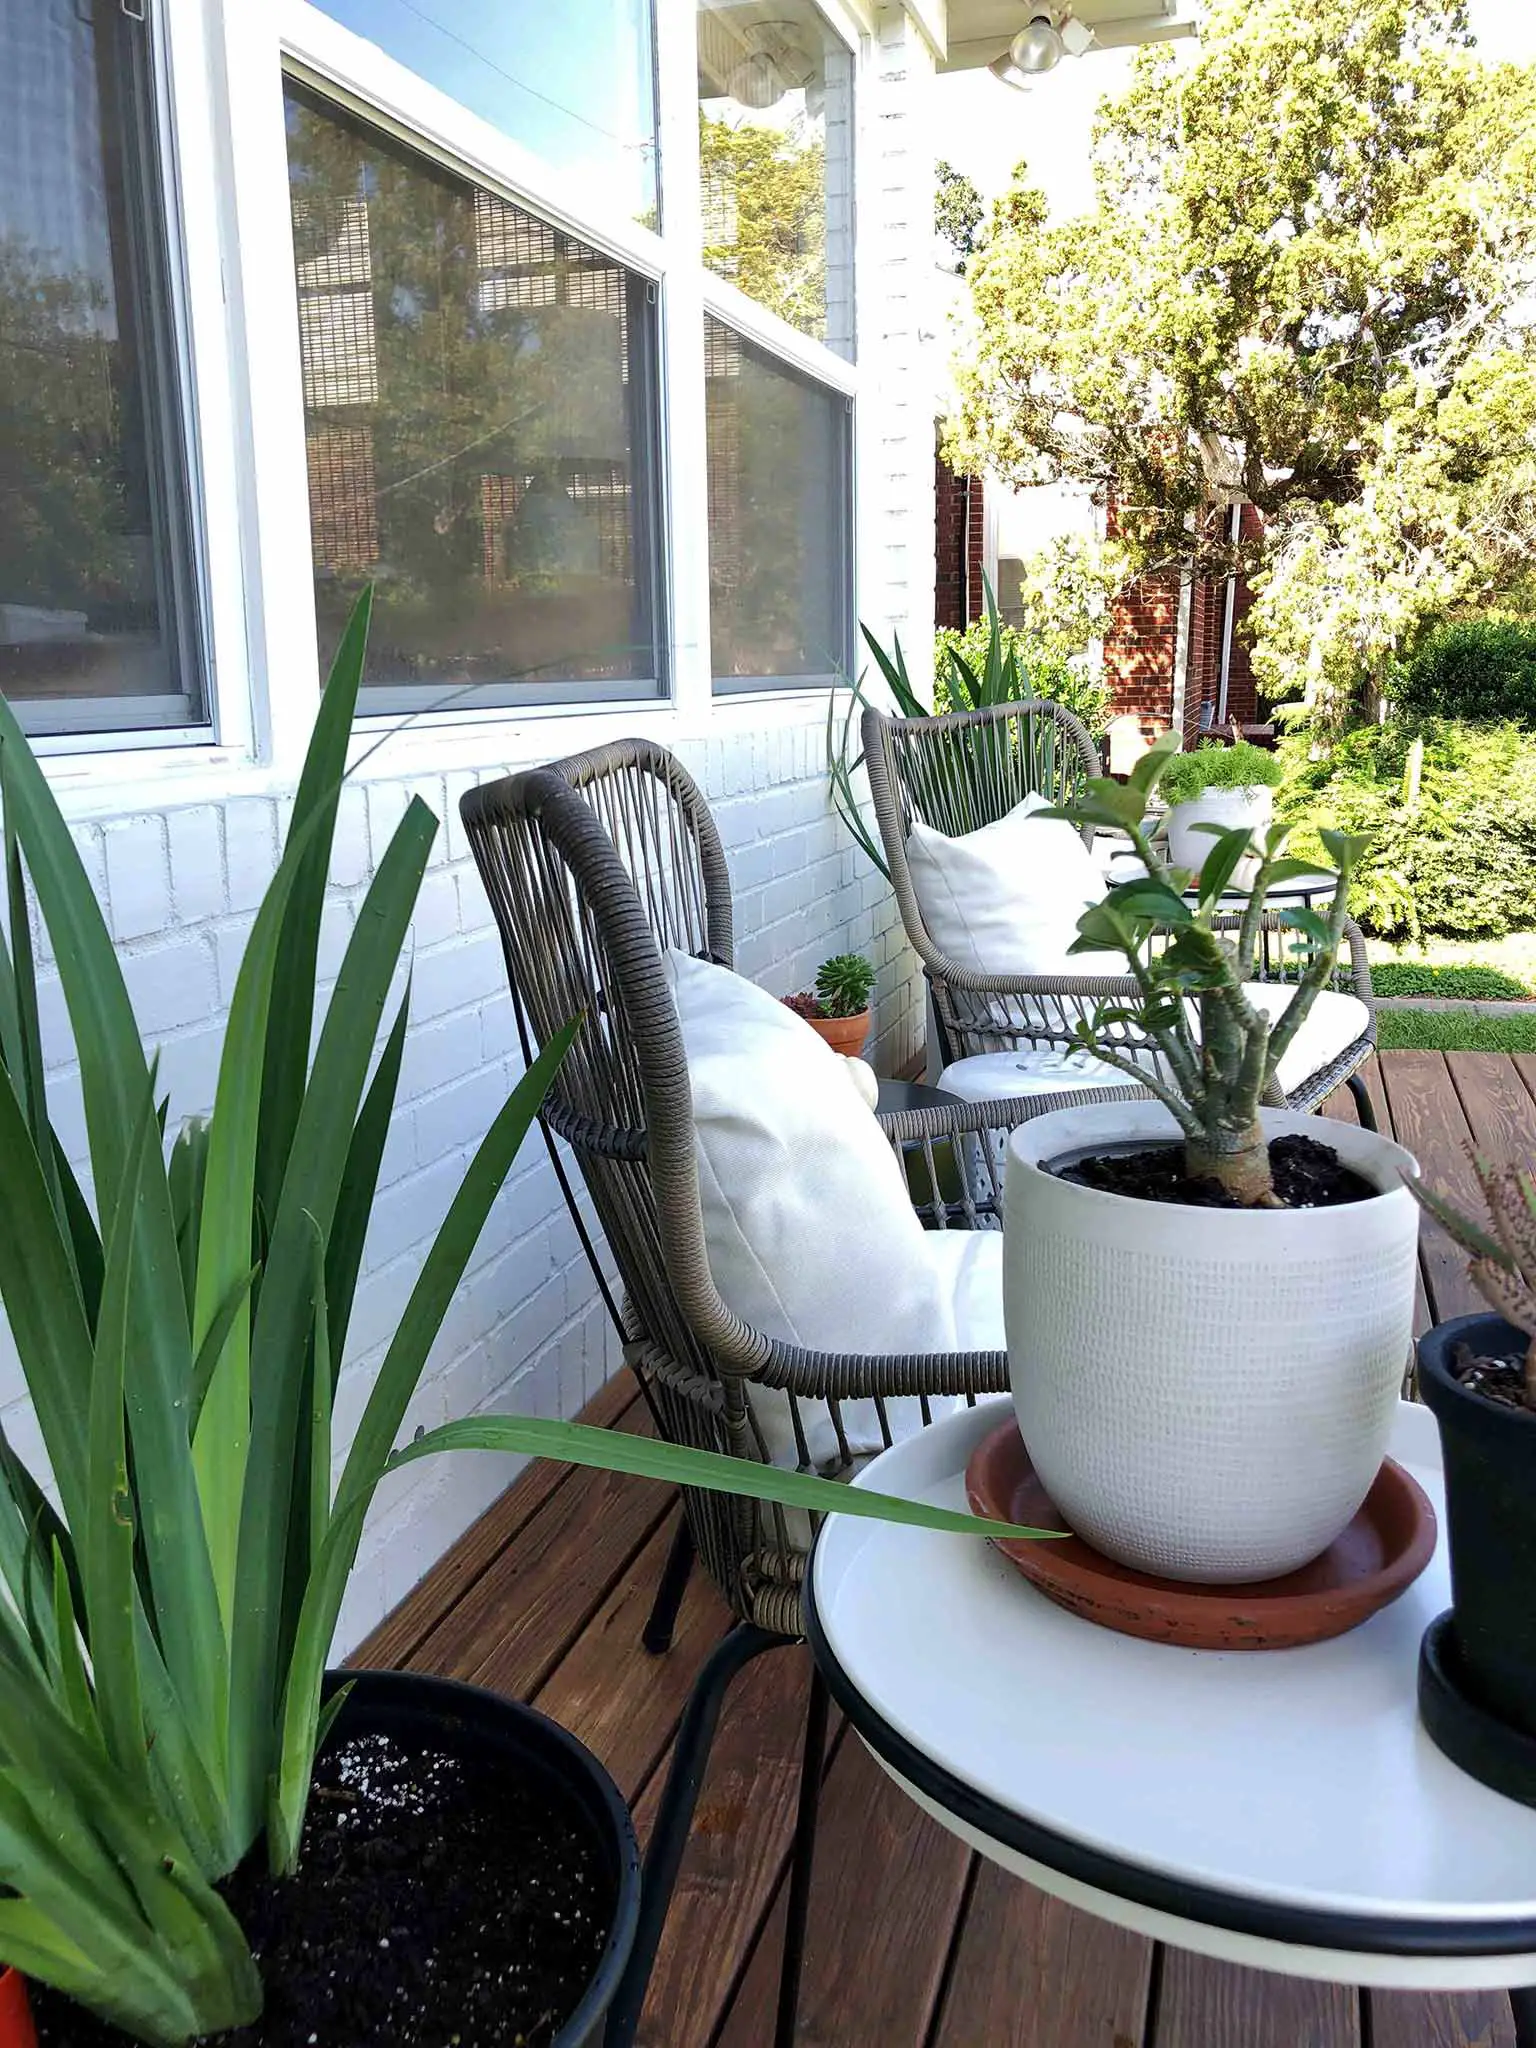 Iris planters - Front porch fall makeover reveal - That Homebird Life Blog